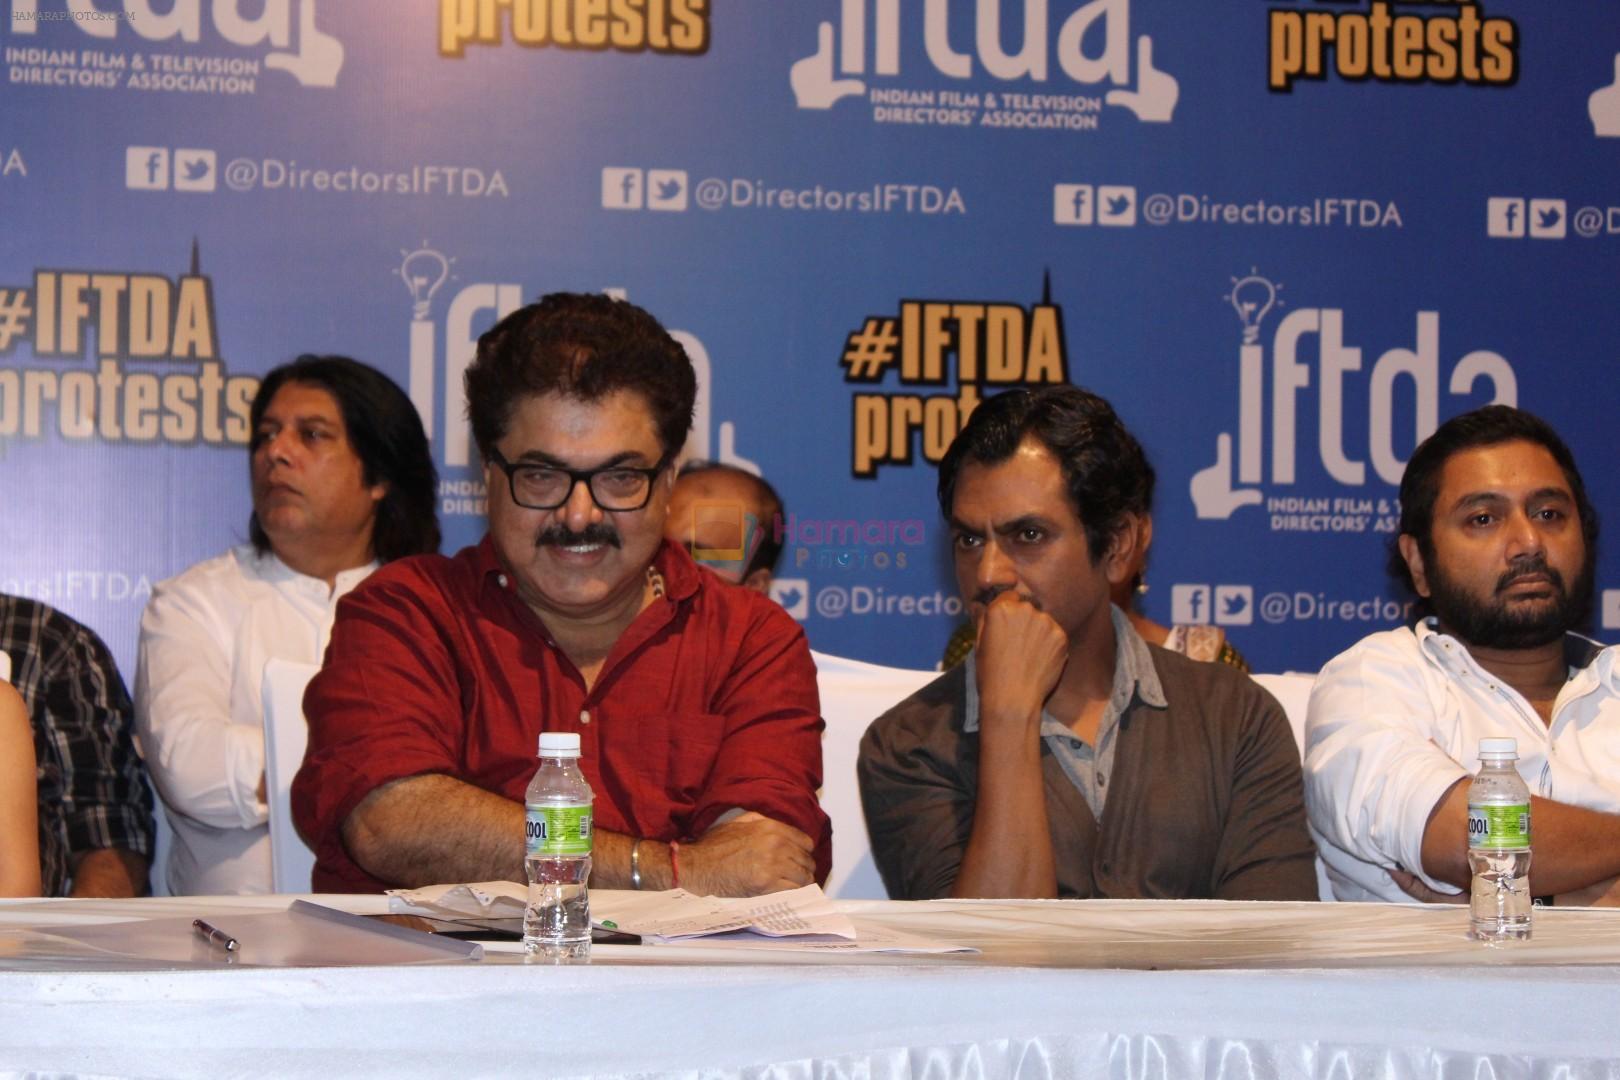 Ashok Pandit, Nawazuddin Siddiqui At The Press Conference Along With Iftda (Indian Films & Tv Directors Association) on 2nd Aug 2017